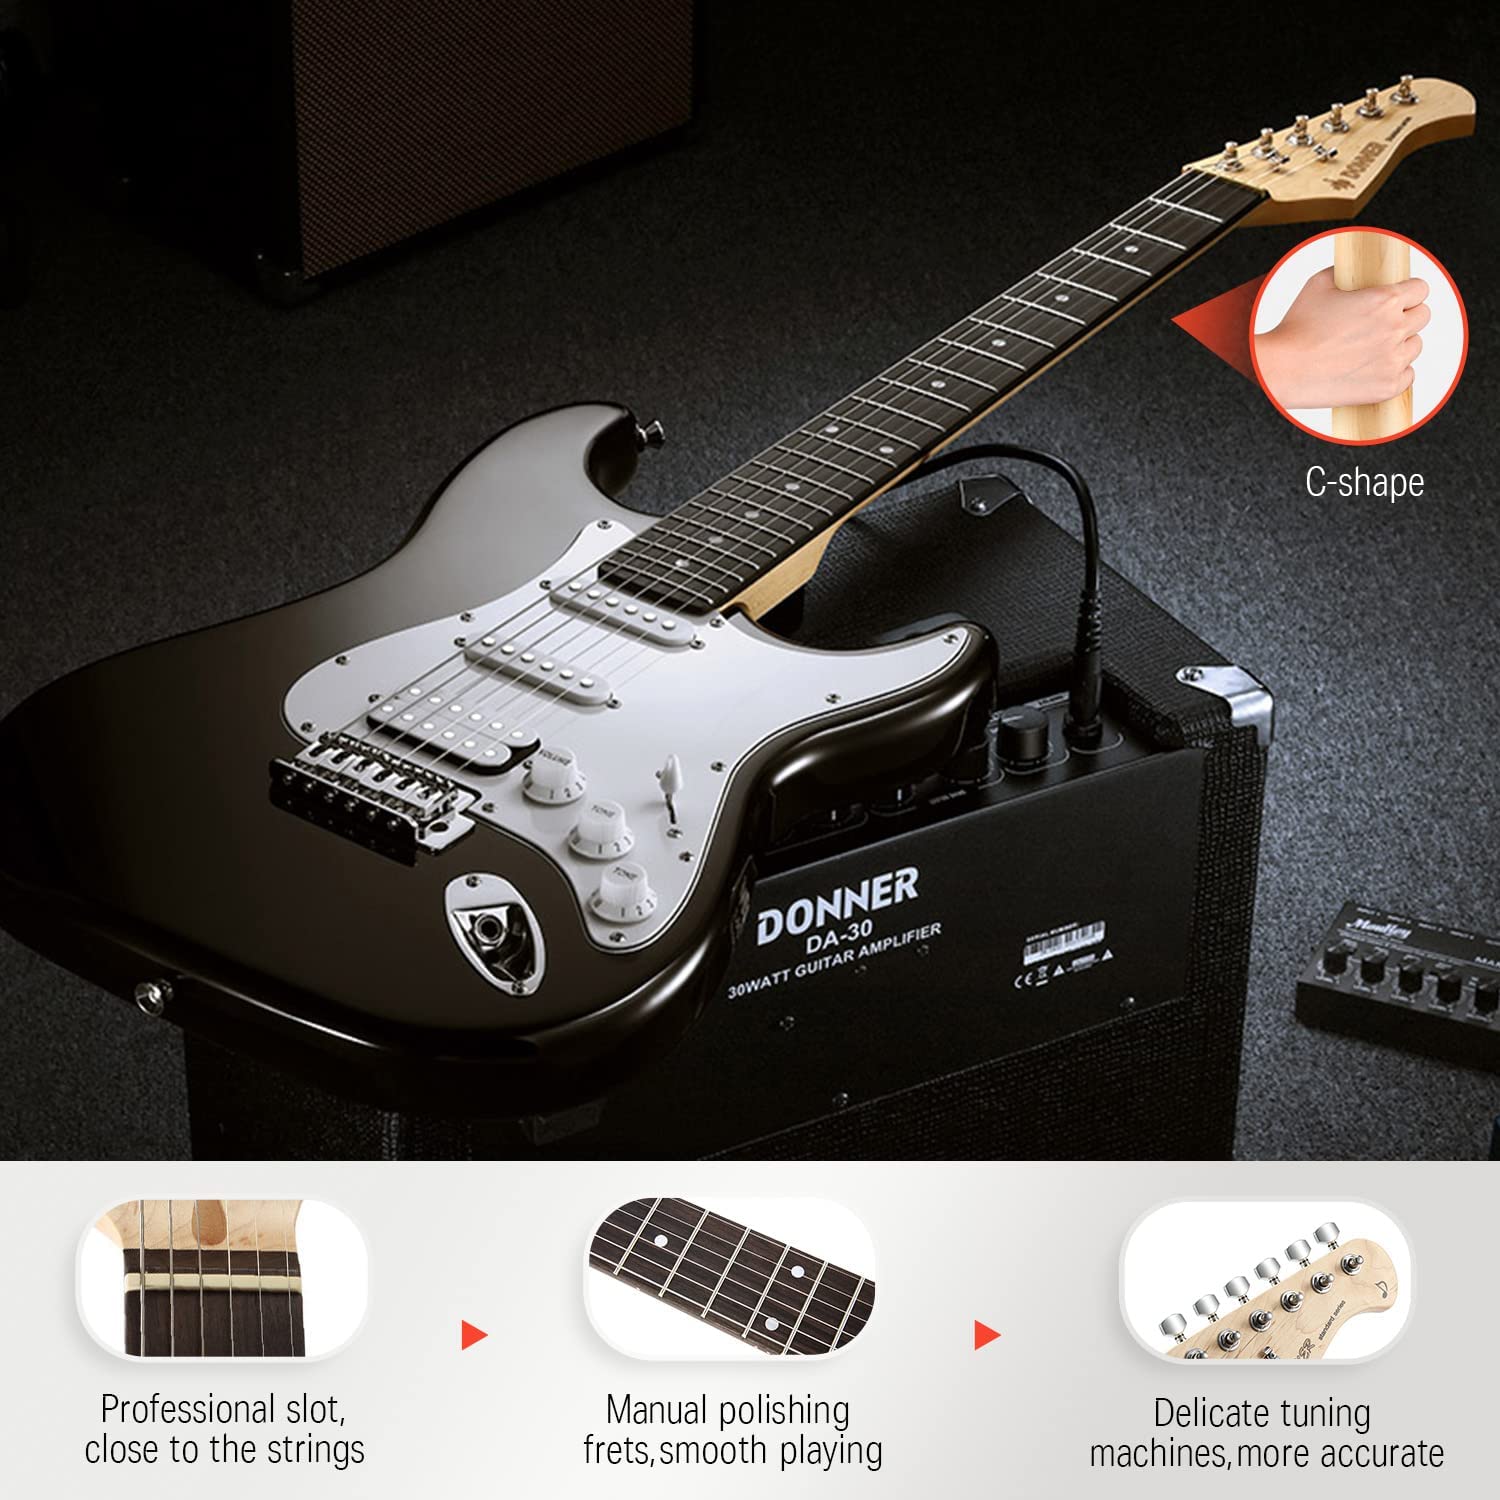 Donner DST-100B 39" Electric Guitar Beginner Kit Solid Body Full Size HSS for Starter, with Amplifier, Bag, Digital Tuner, Capo, Strap, String, Cable, Picks, Black - image 4 of 11